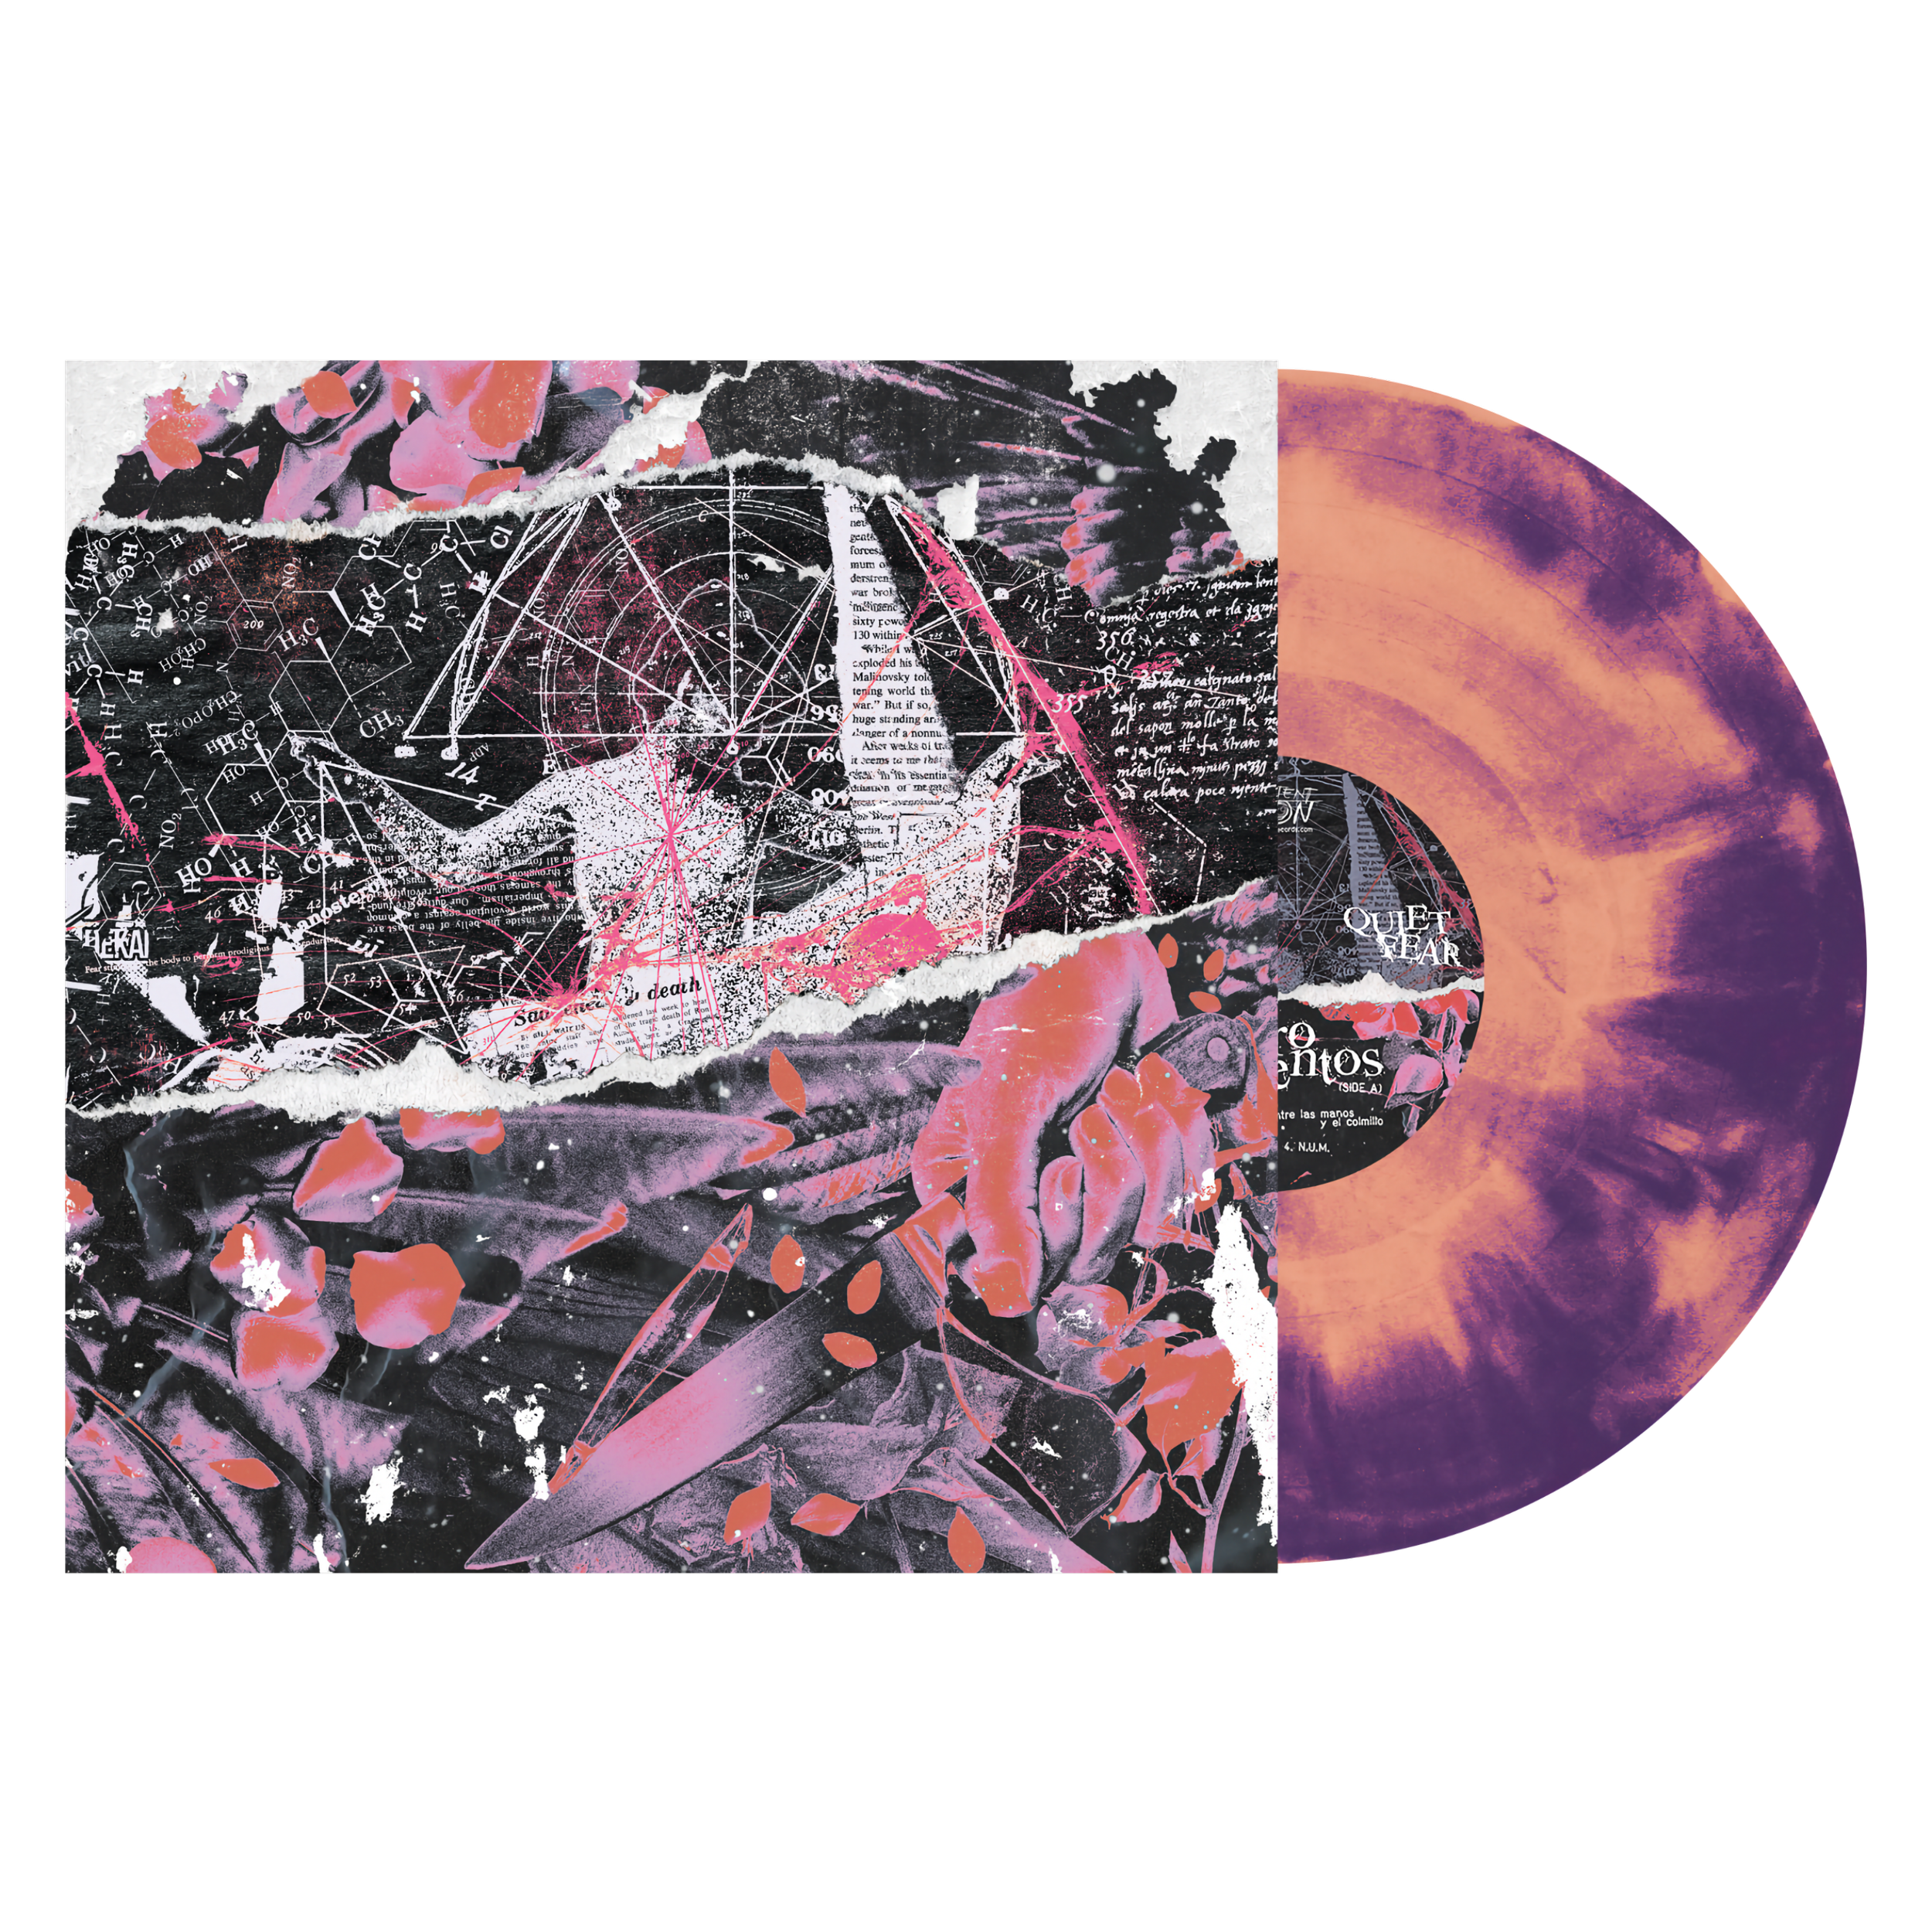 Massa Nera & Quiet Fear - Vinyl - Peach Purple.png